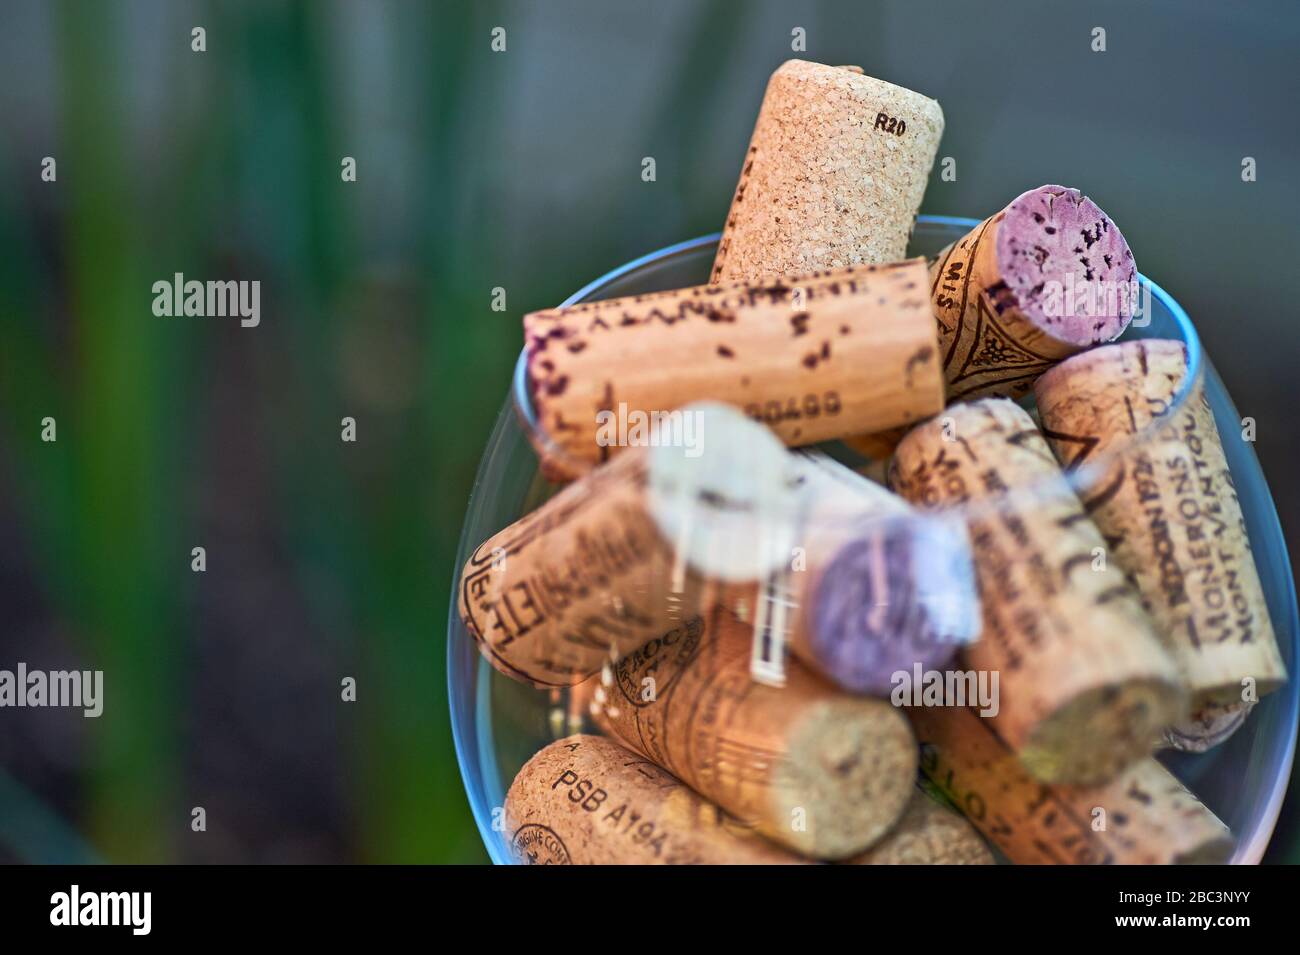 Imagen abstracta de una copa de vino llena de copas de vino. Foto de stock